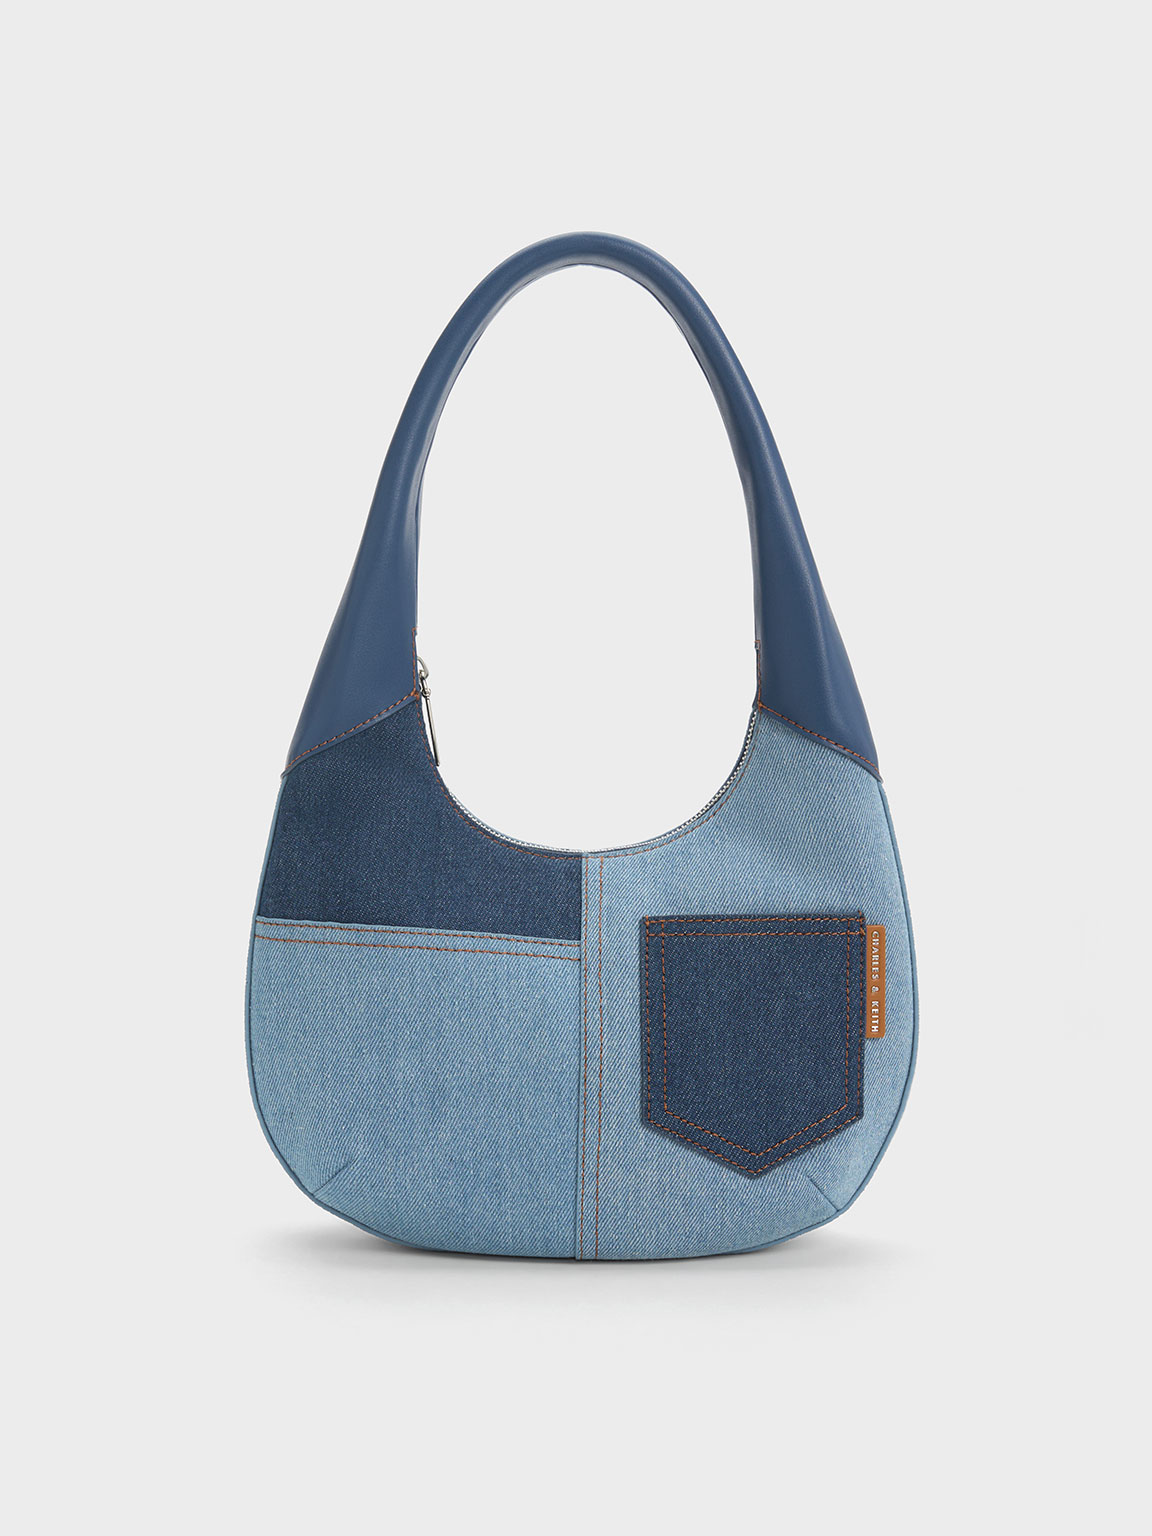 Classic Design Denim Blue Flap Chain Shoulder Handbags For Women